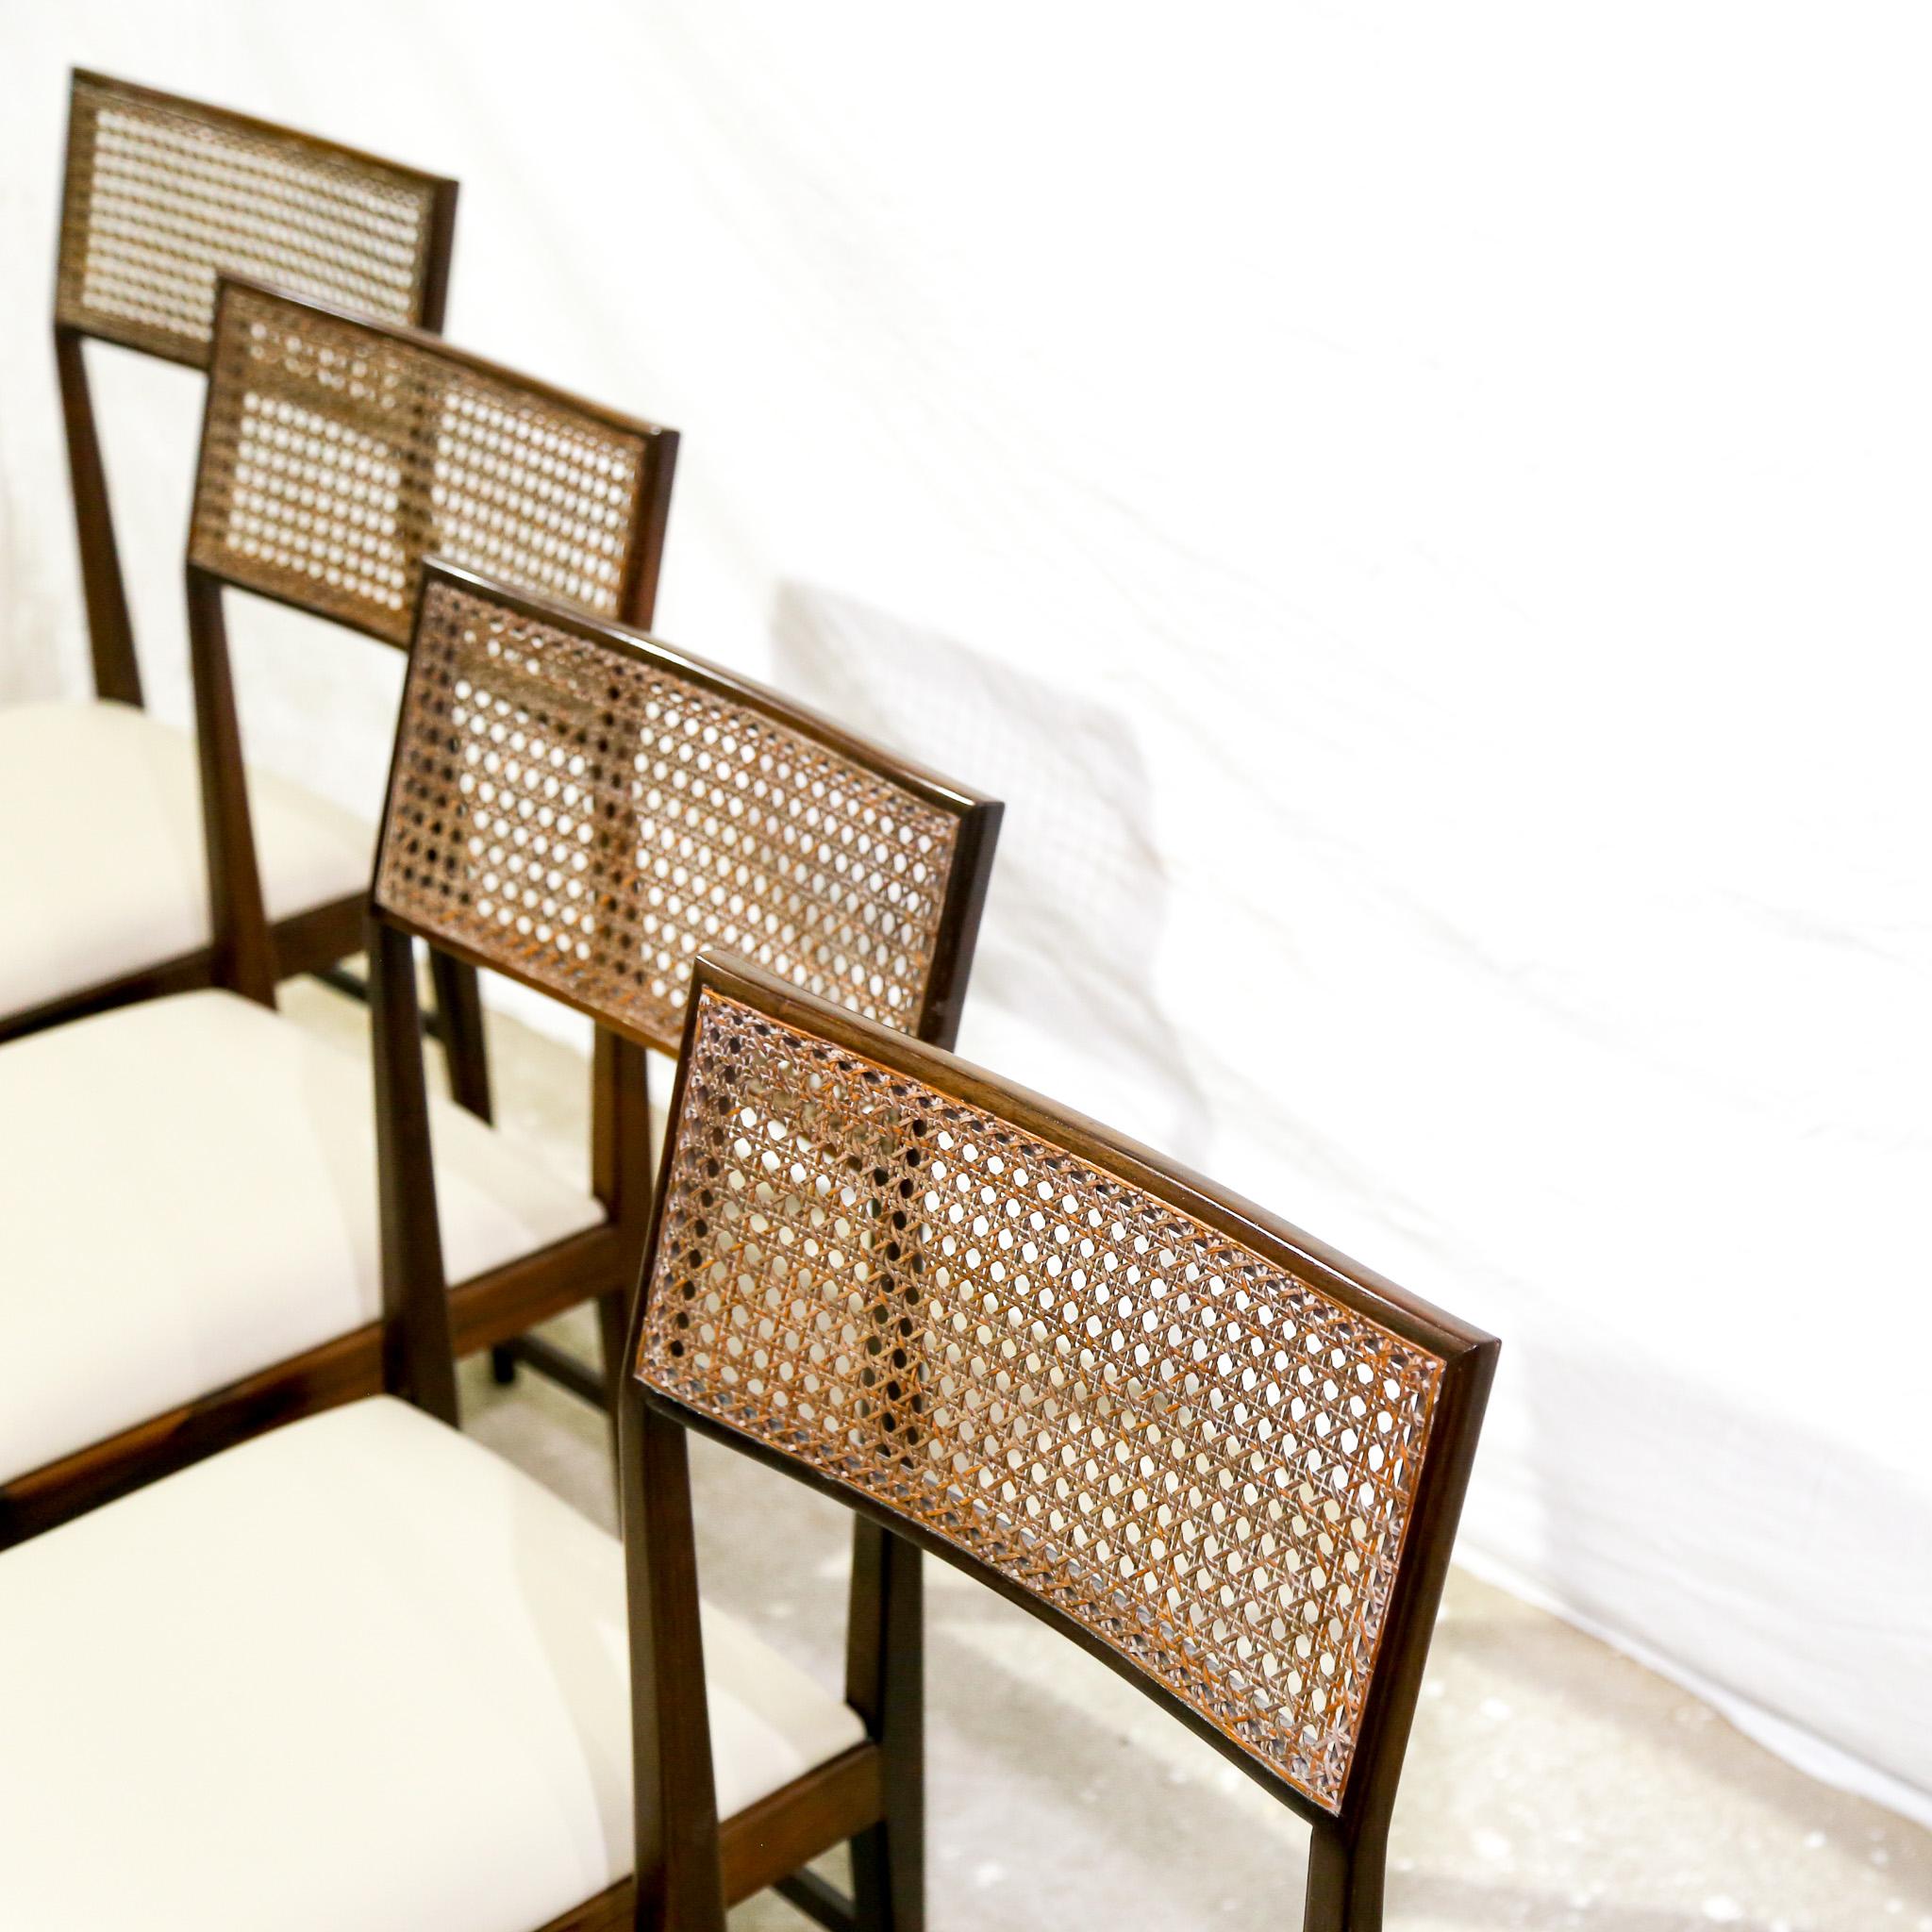 Brazilian Modern 4 Chair Set in Hardwood, Cane, Leather, Joaquim Tenreiro 1950s For Sale 6